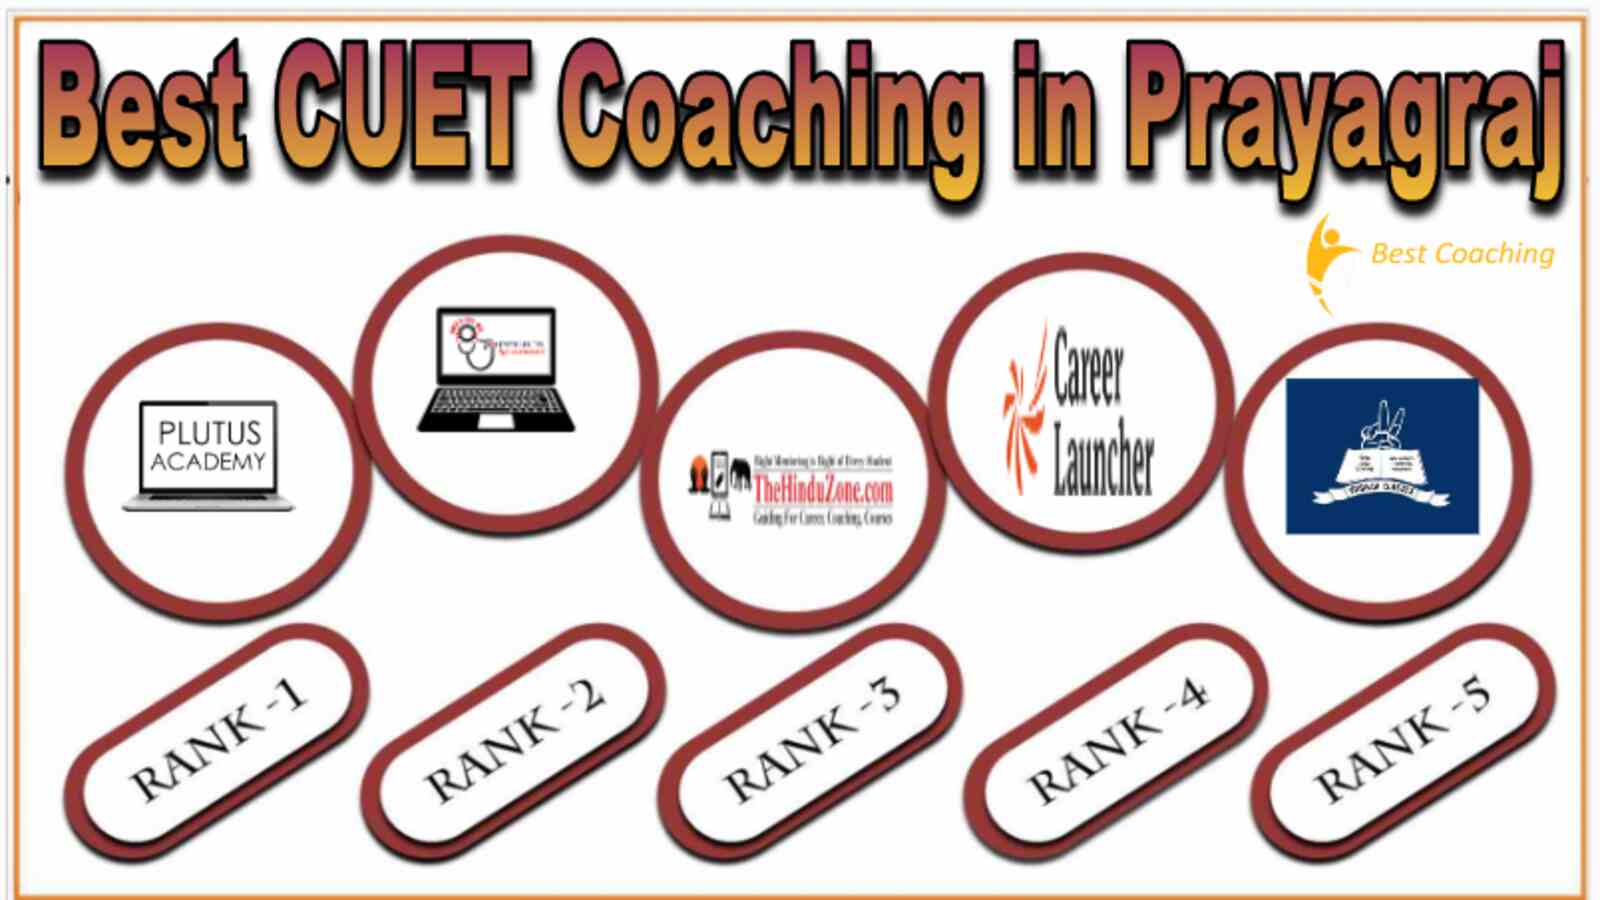 Best CUET Coaching in Prayagraj